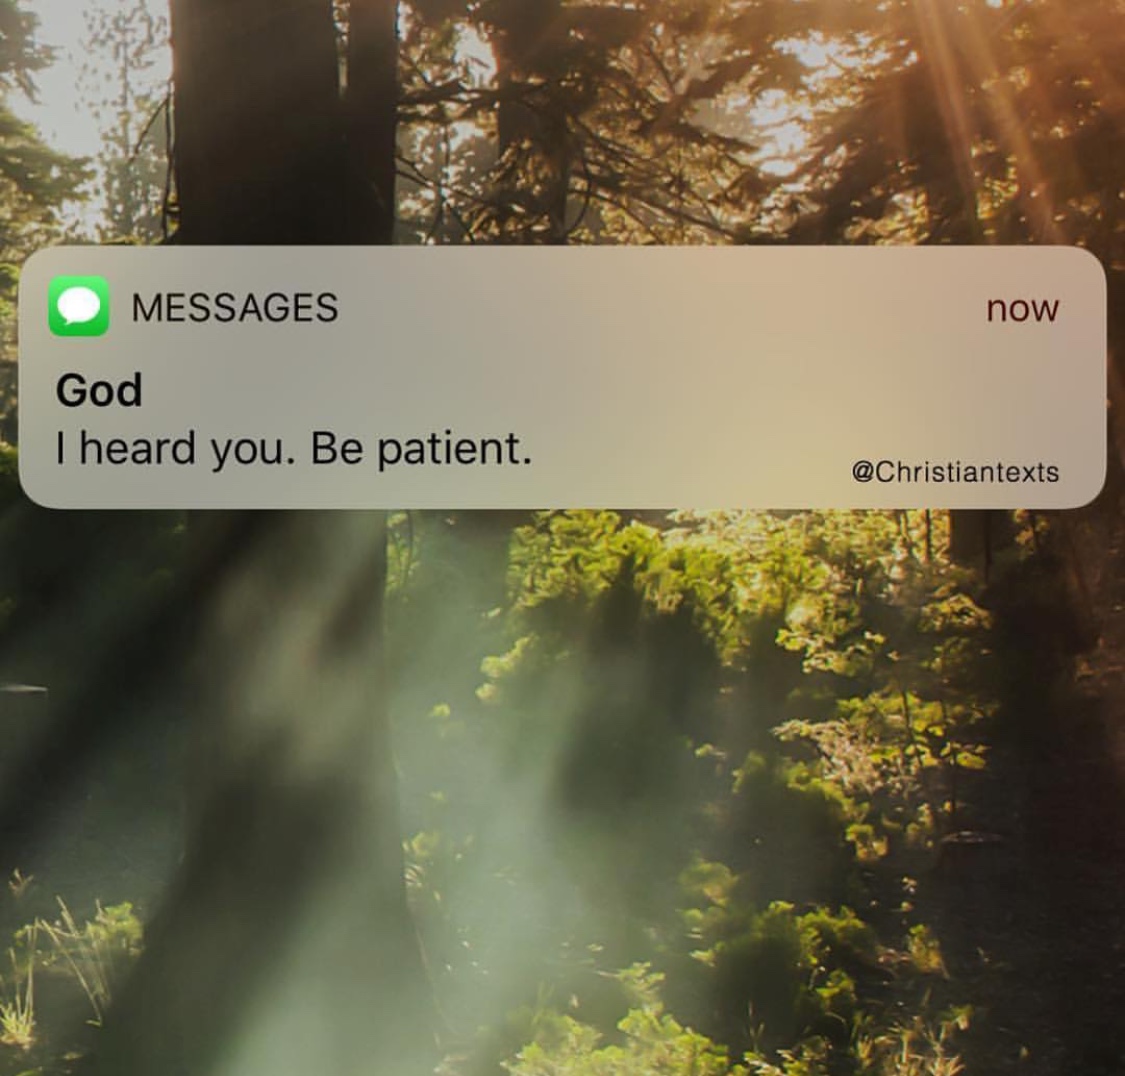 God text message: Be patient